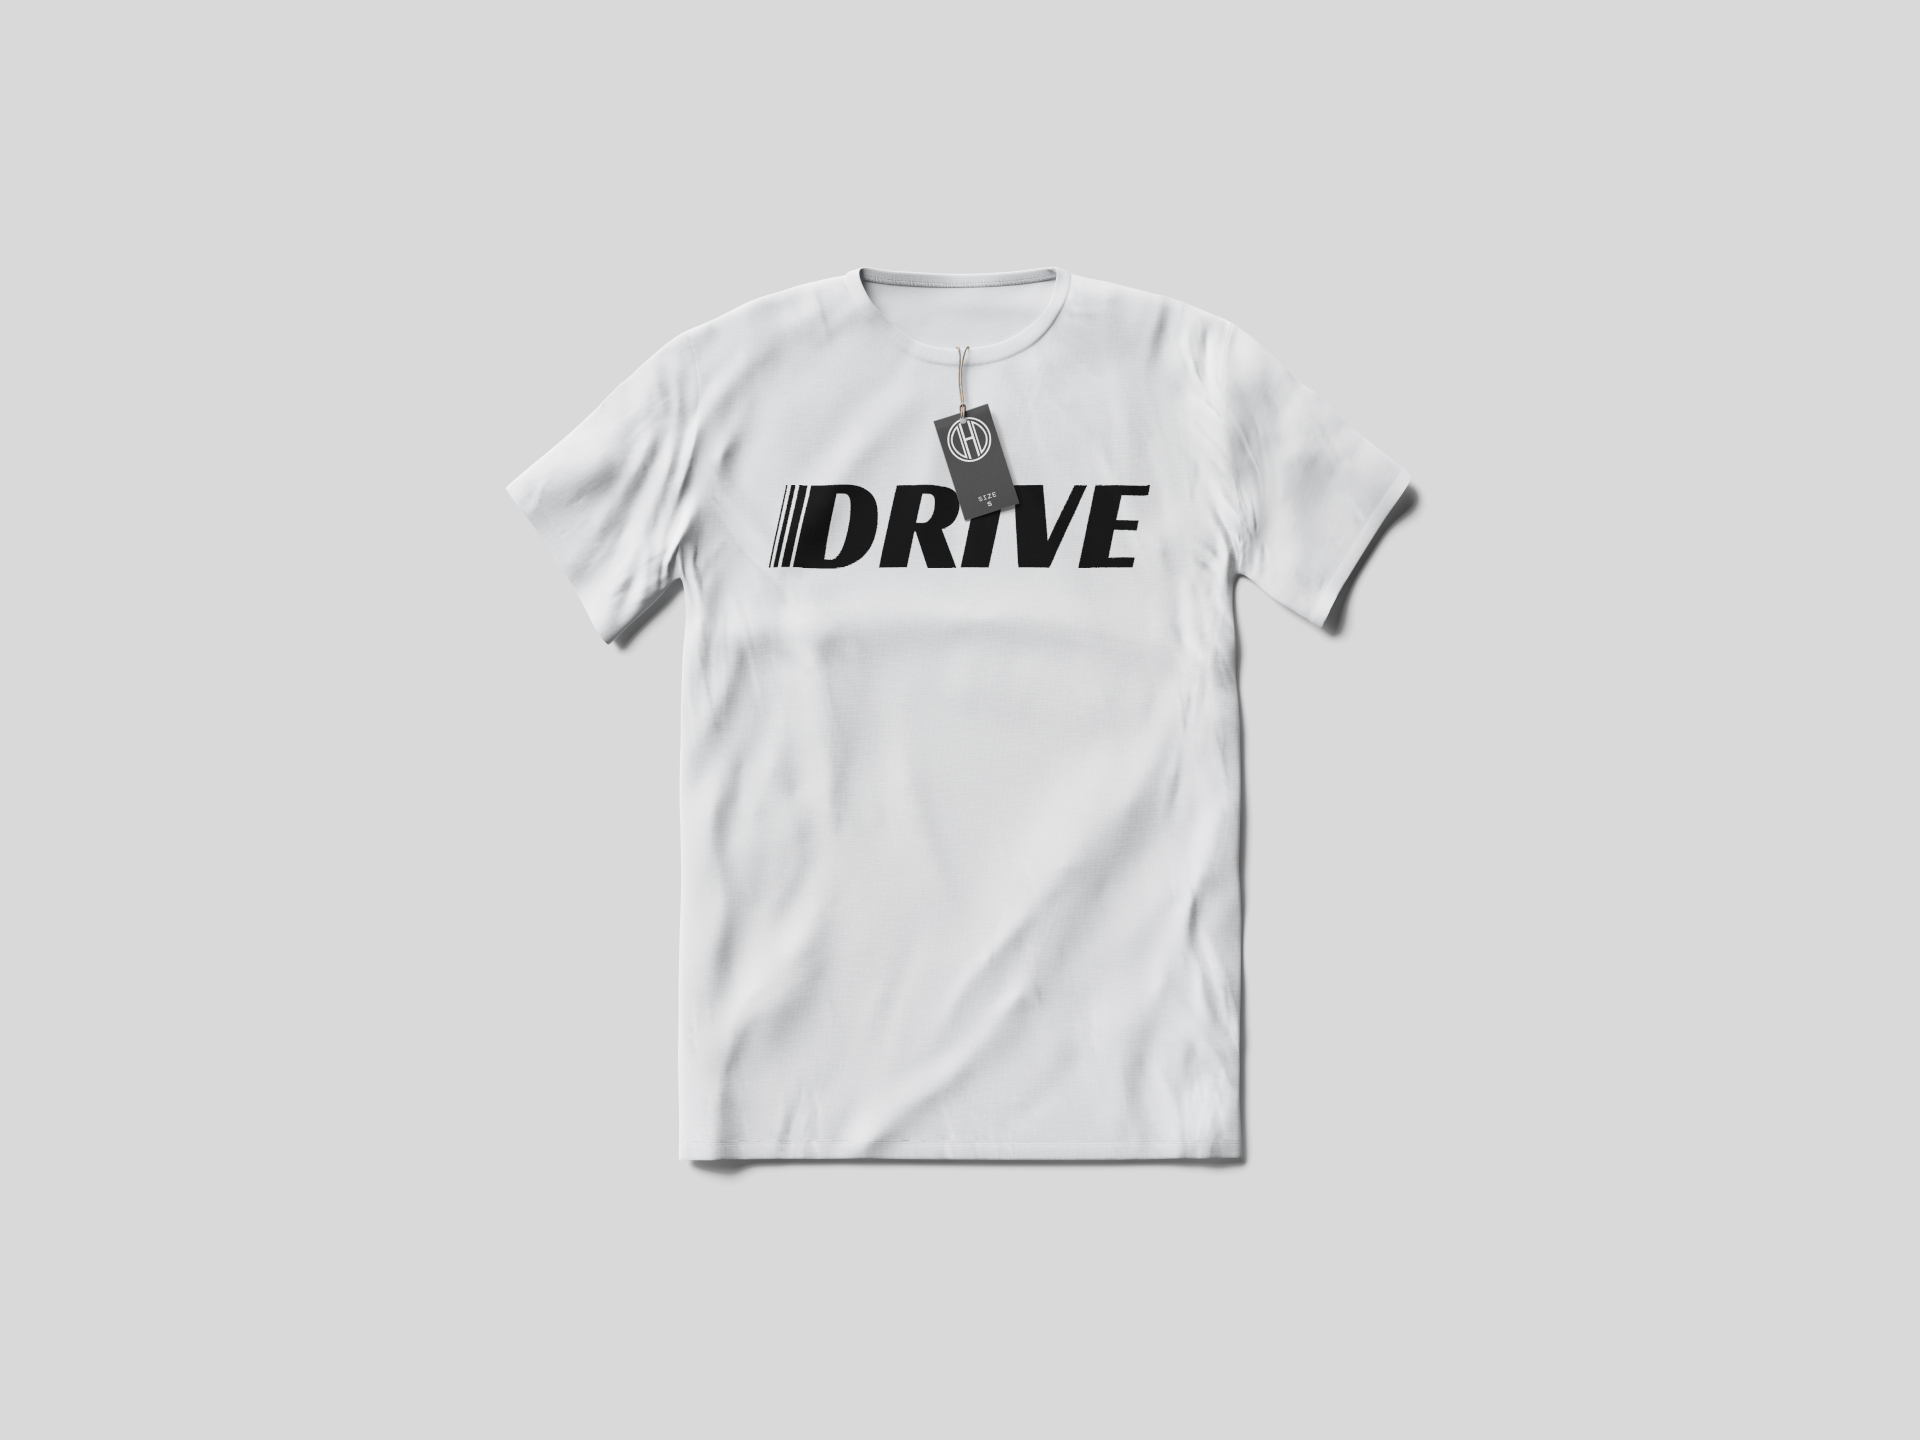 DRIVE T-Shirt – DRIVE White T-shirt